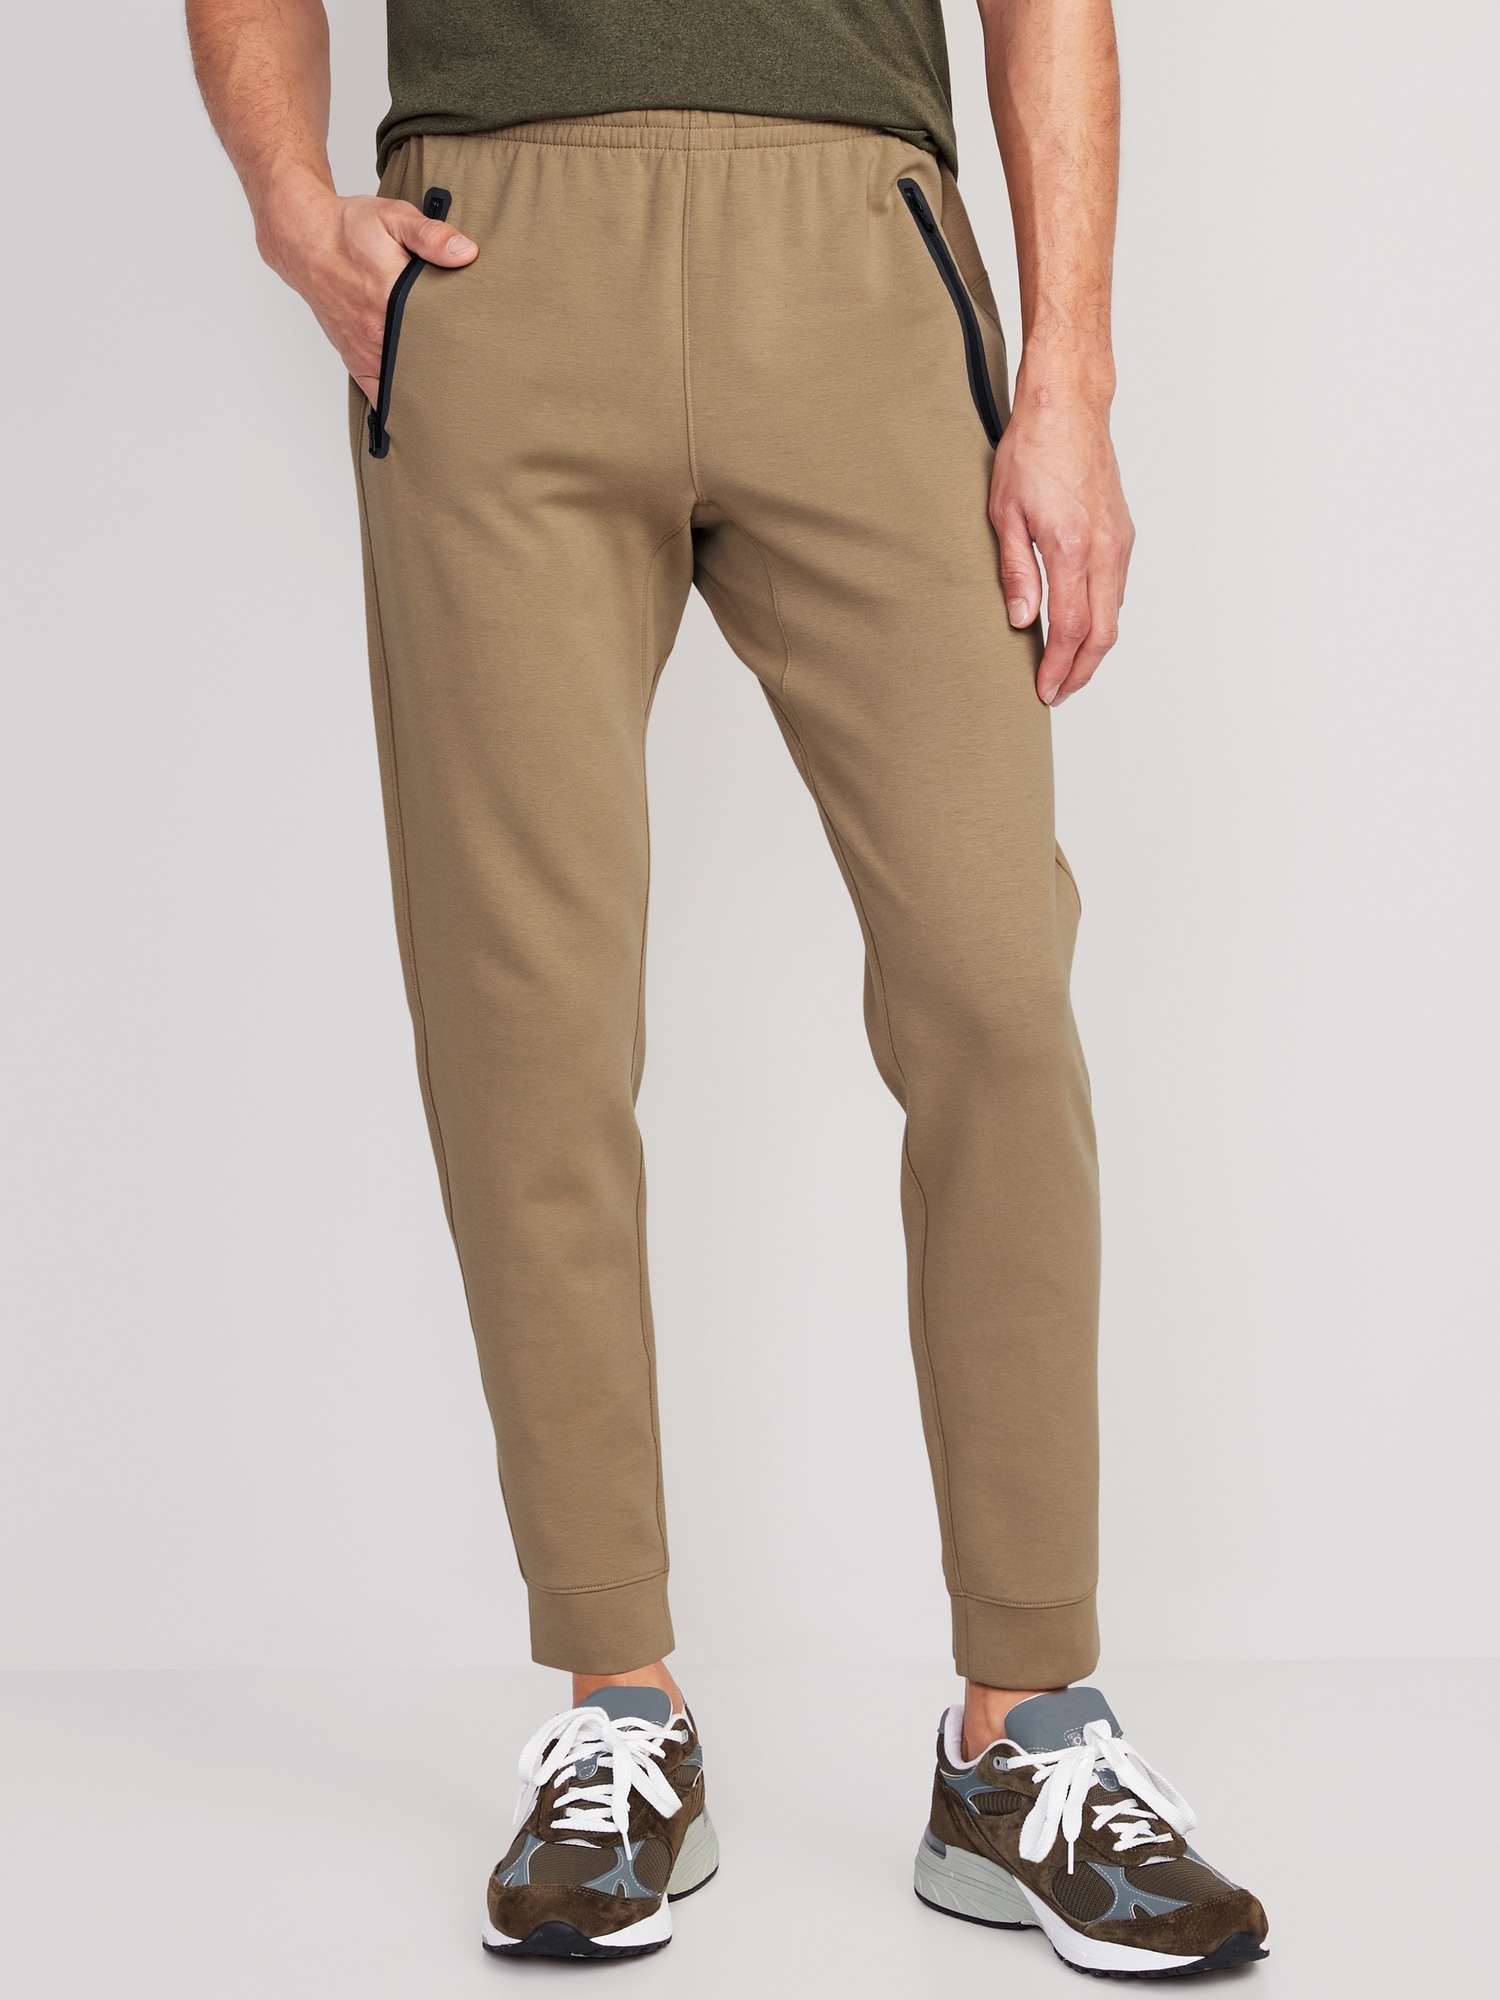 Ardene Man Solid Fleece Sweatpants For Men in Medium, Size, 100% Cotton, Fleece-Lined